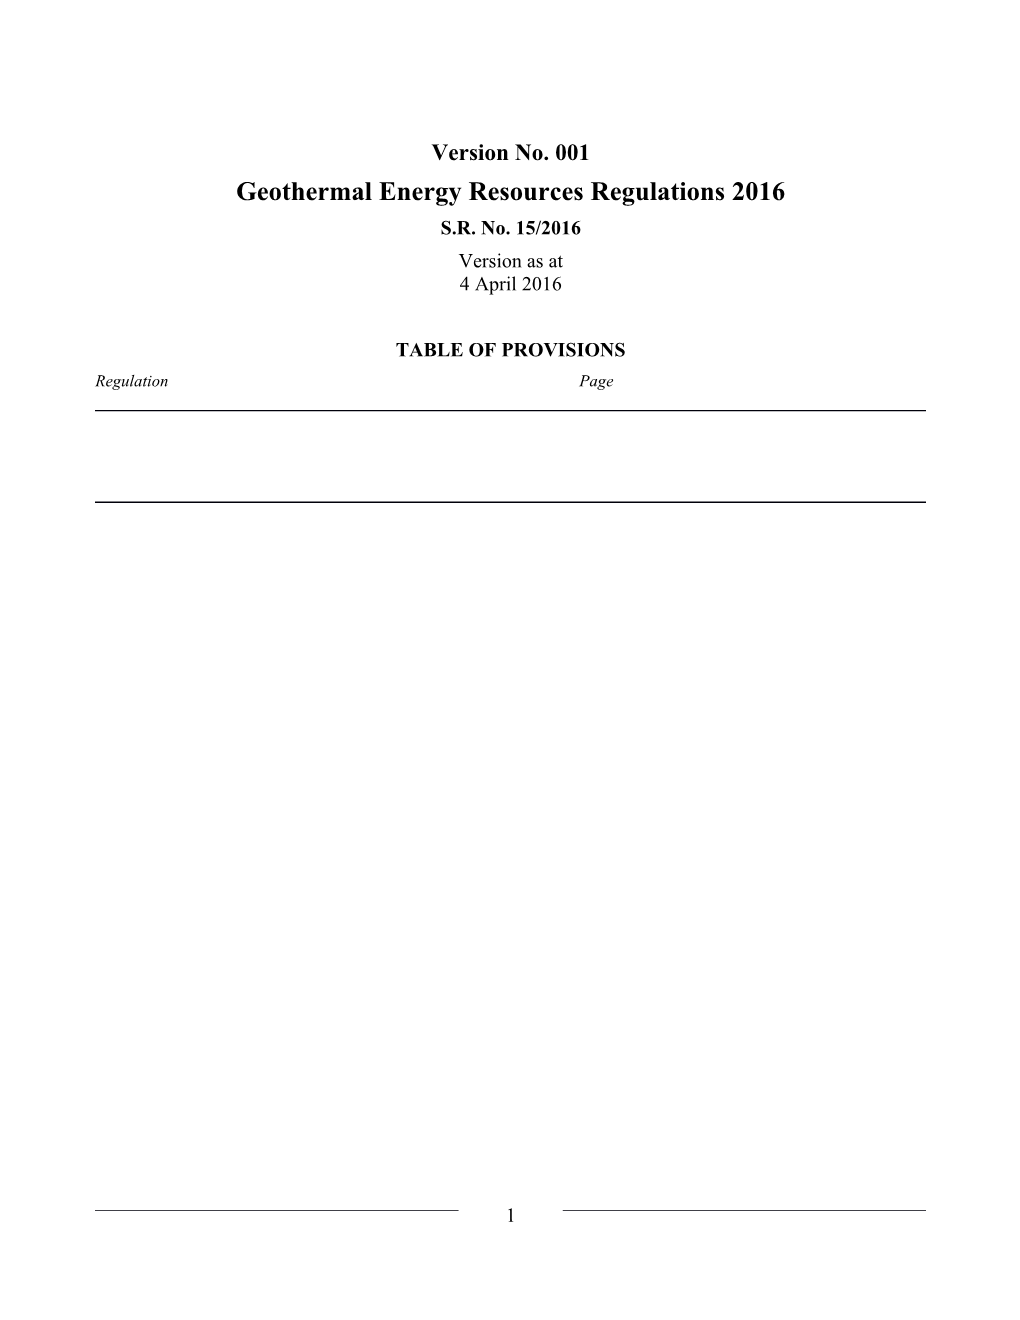 Geothermal Energy Resources Regulations 2016